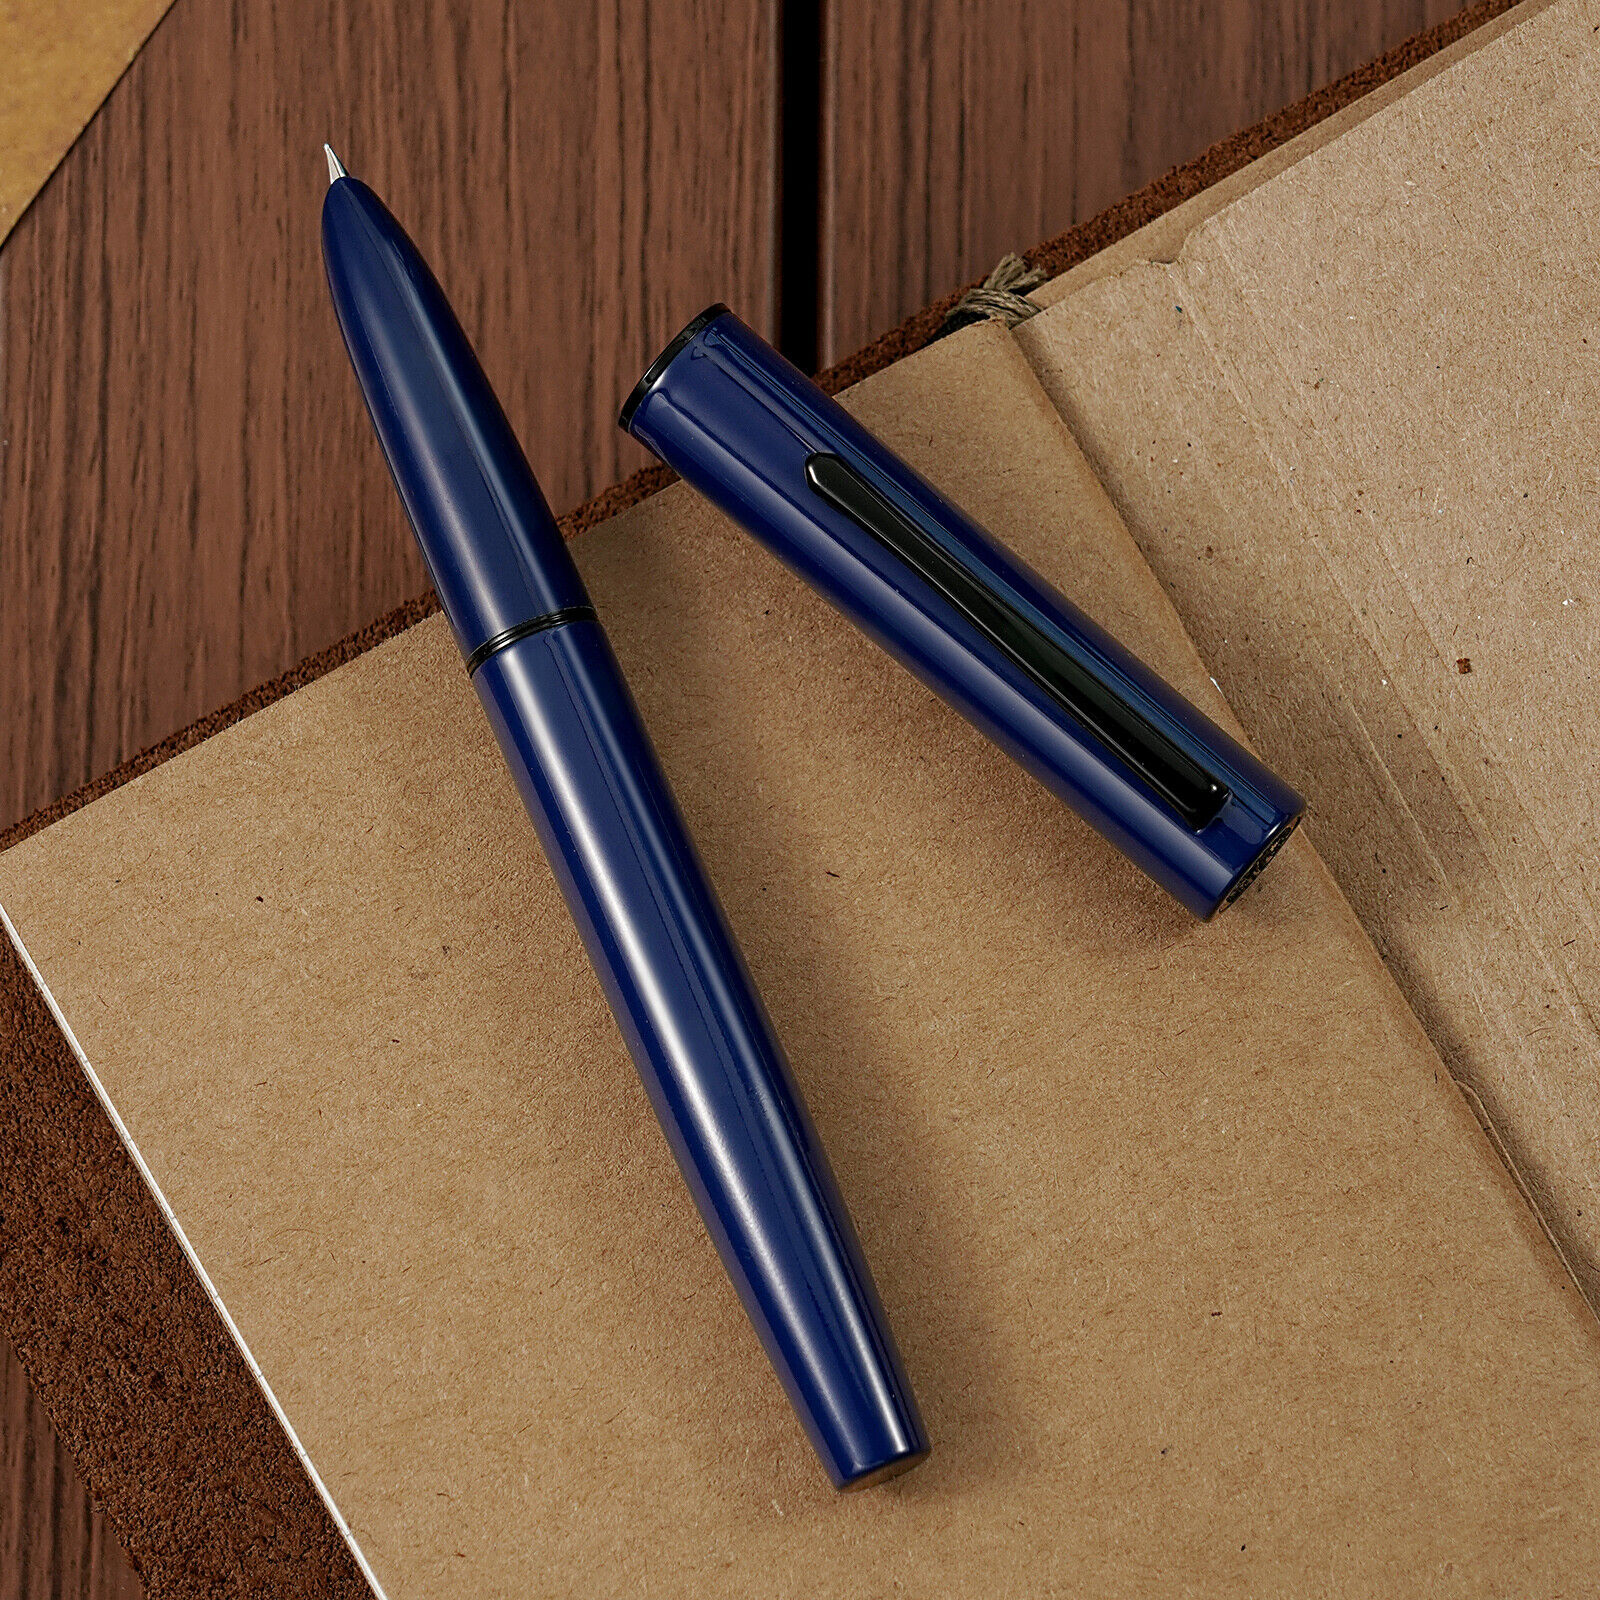 Hongdian C1 Fountain Pen Converter Pen, Brass & Plastic EF/F Nib Writing Pen